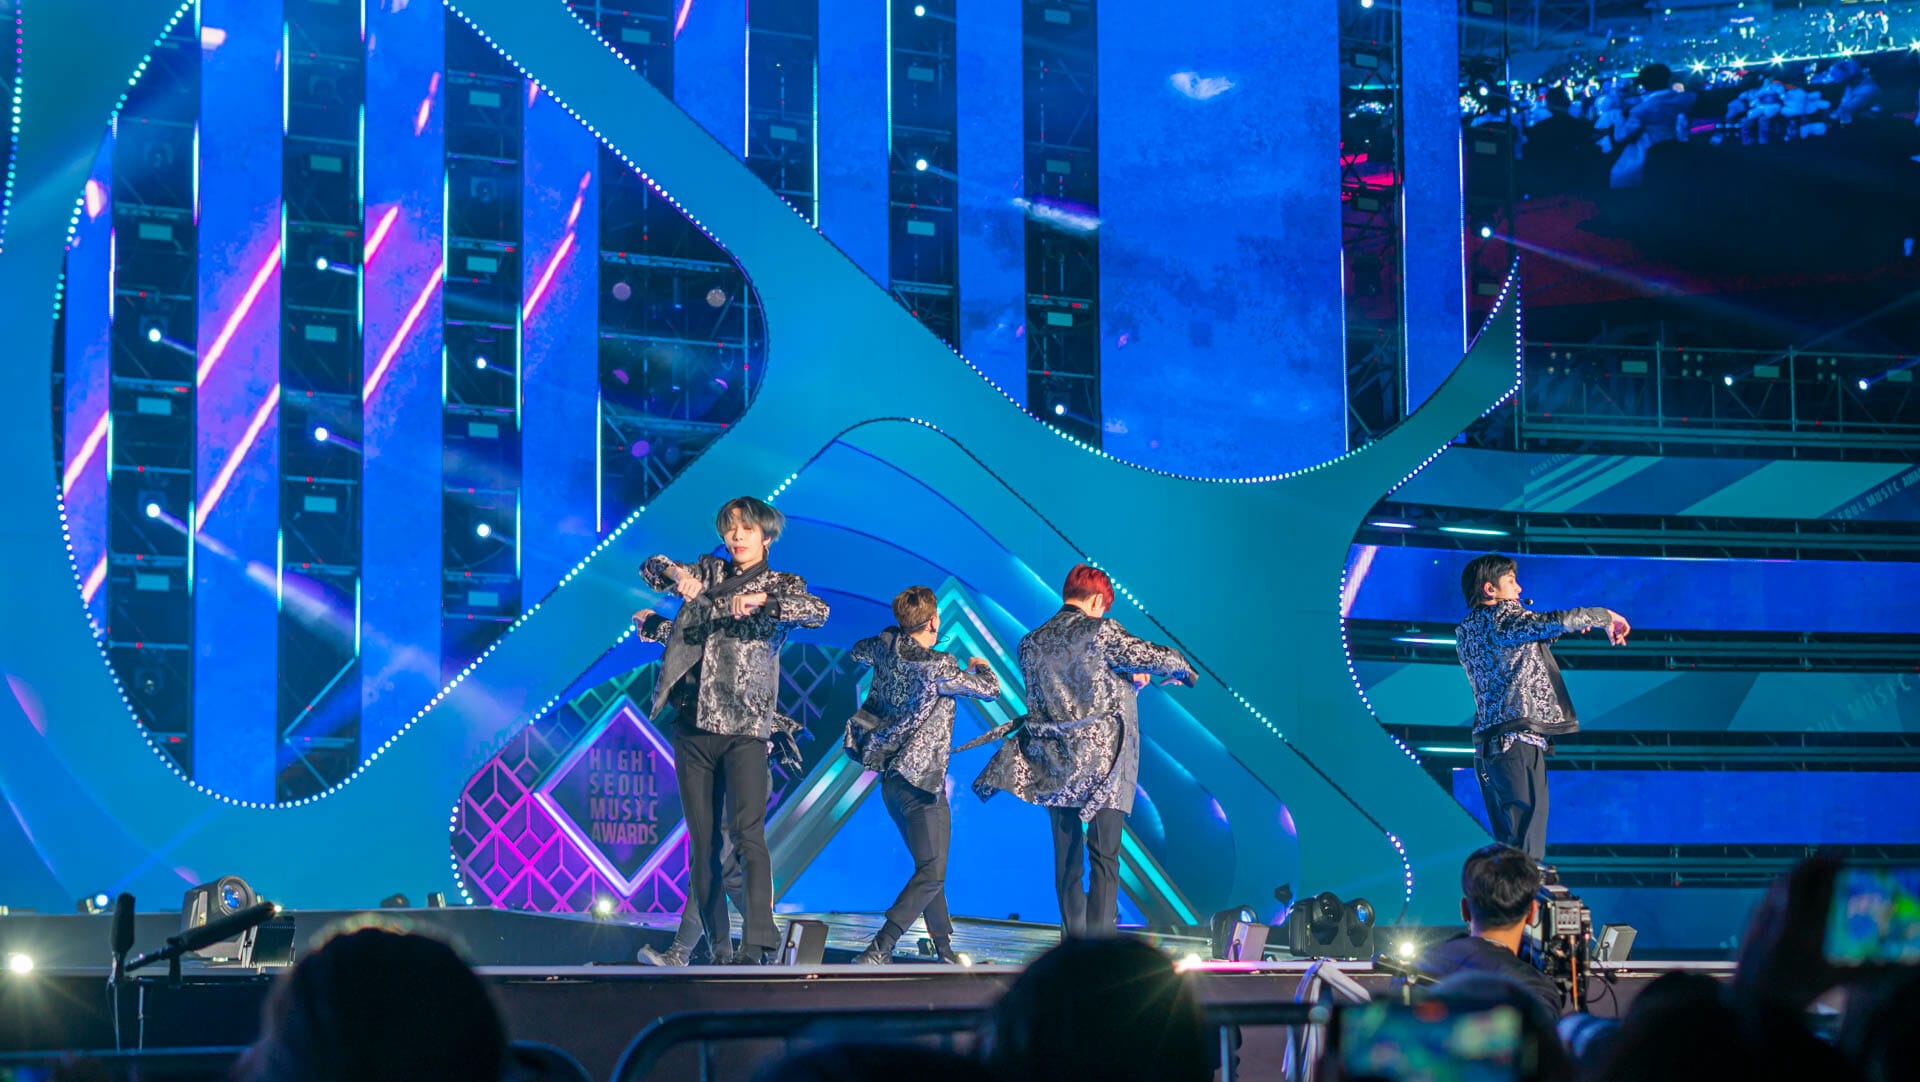 Korea's Best Kpop Show - Seoul Music Awards 9